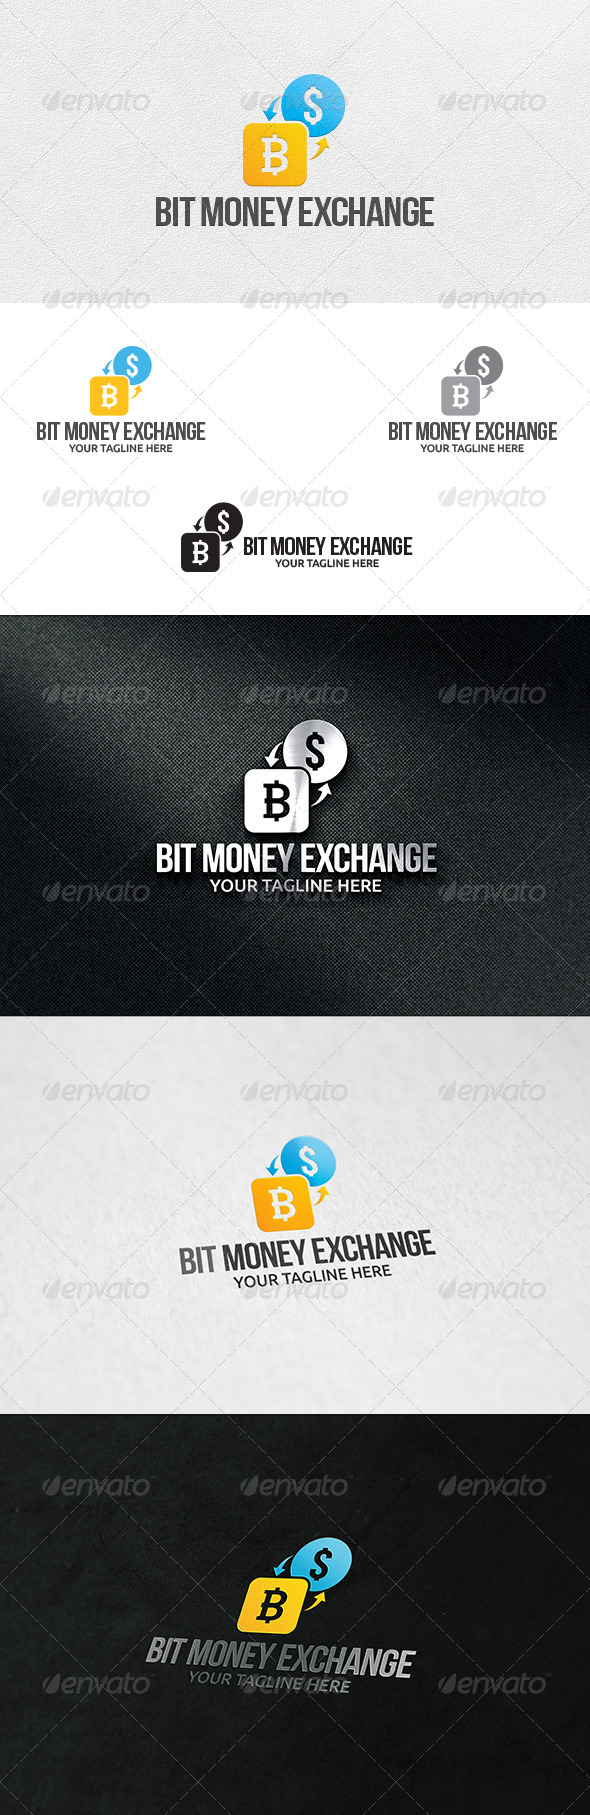 GraphicRiver Bit Money Exchange Logo Template 6610398